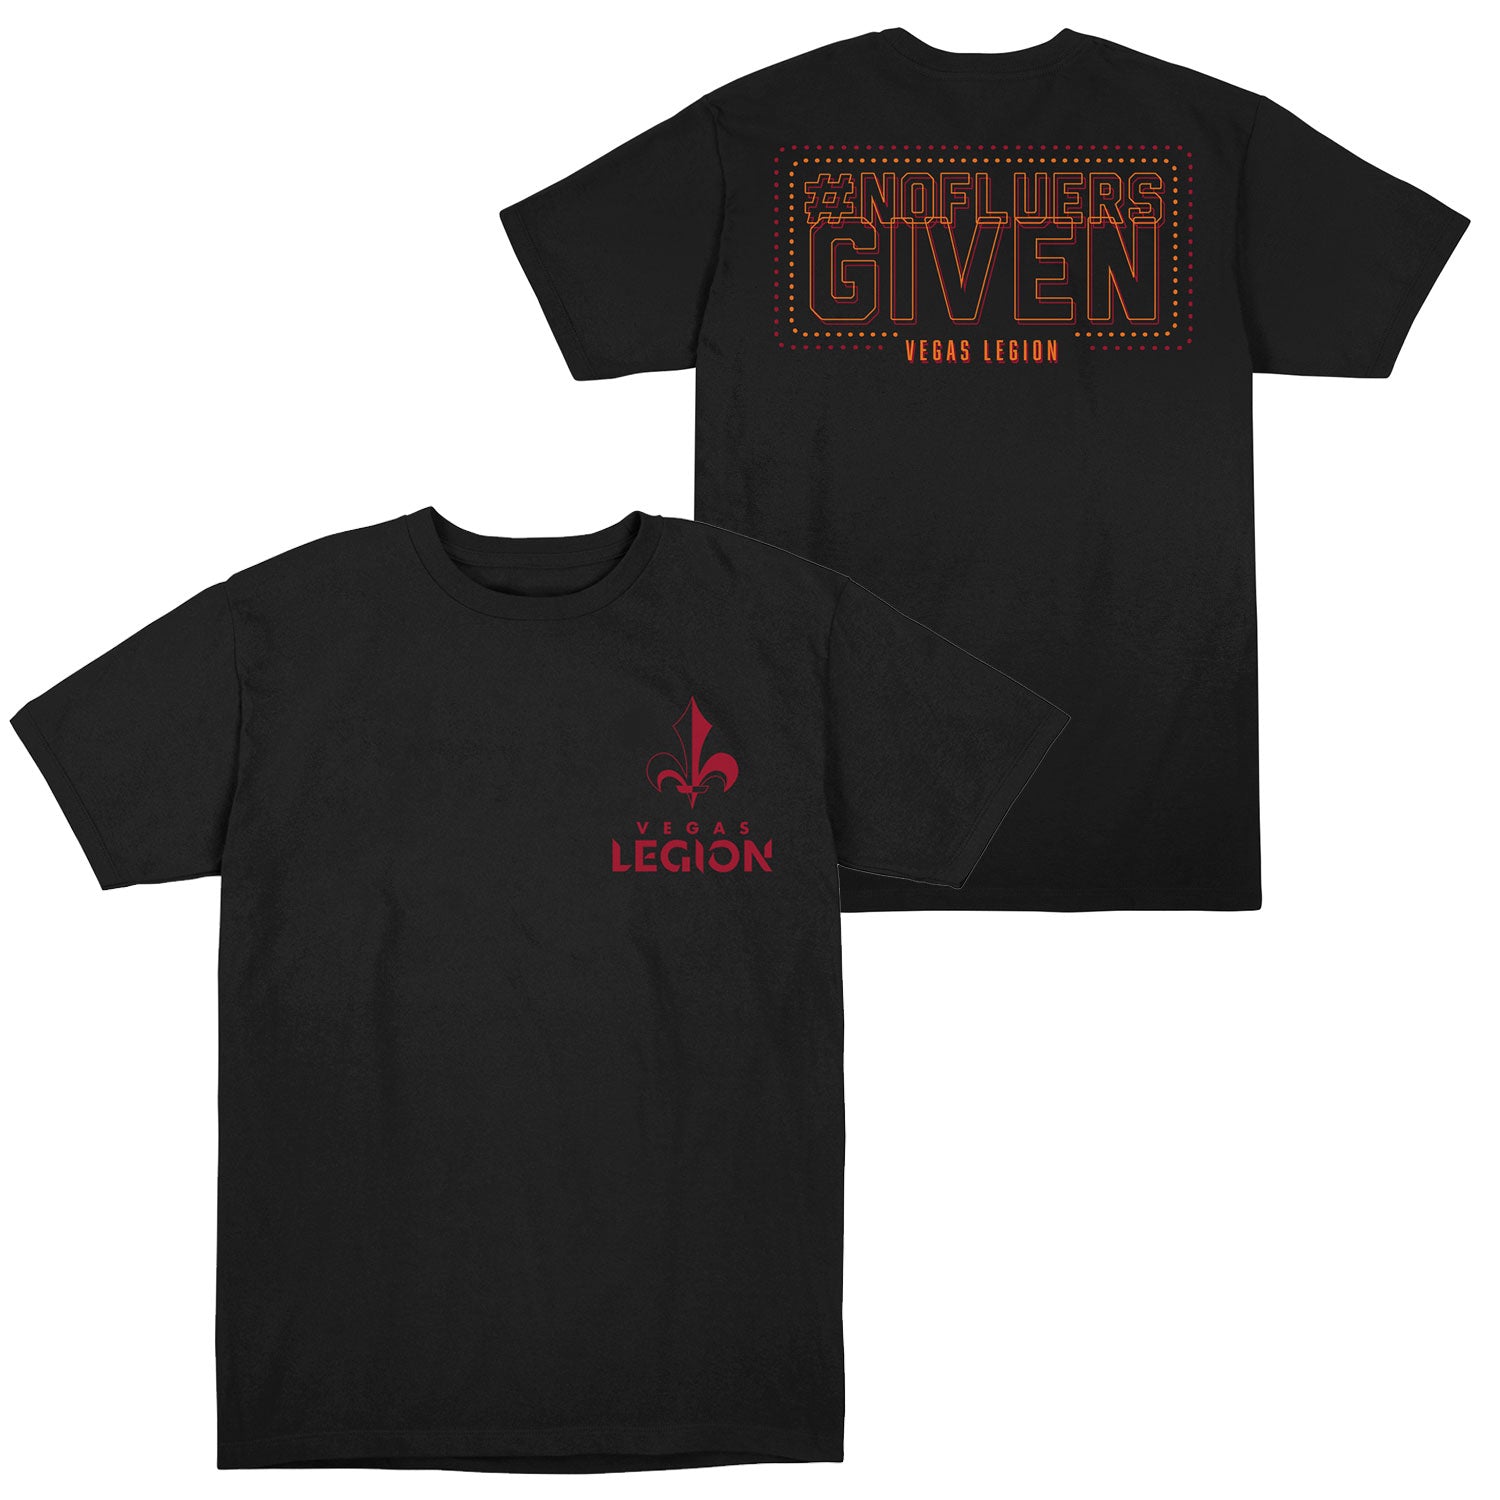 Vegas Legion Slogan Black T-Shirt - Front and Back View